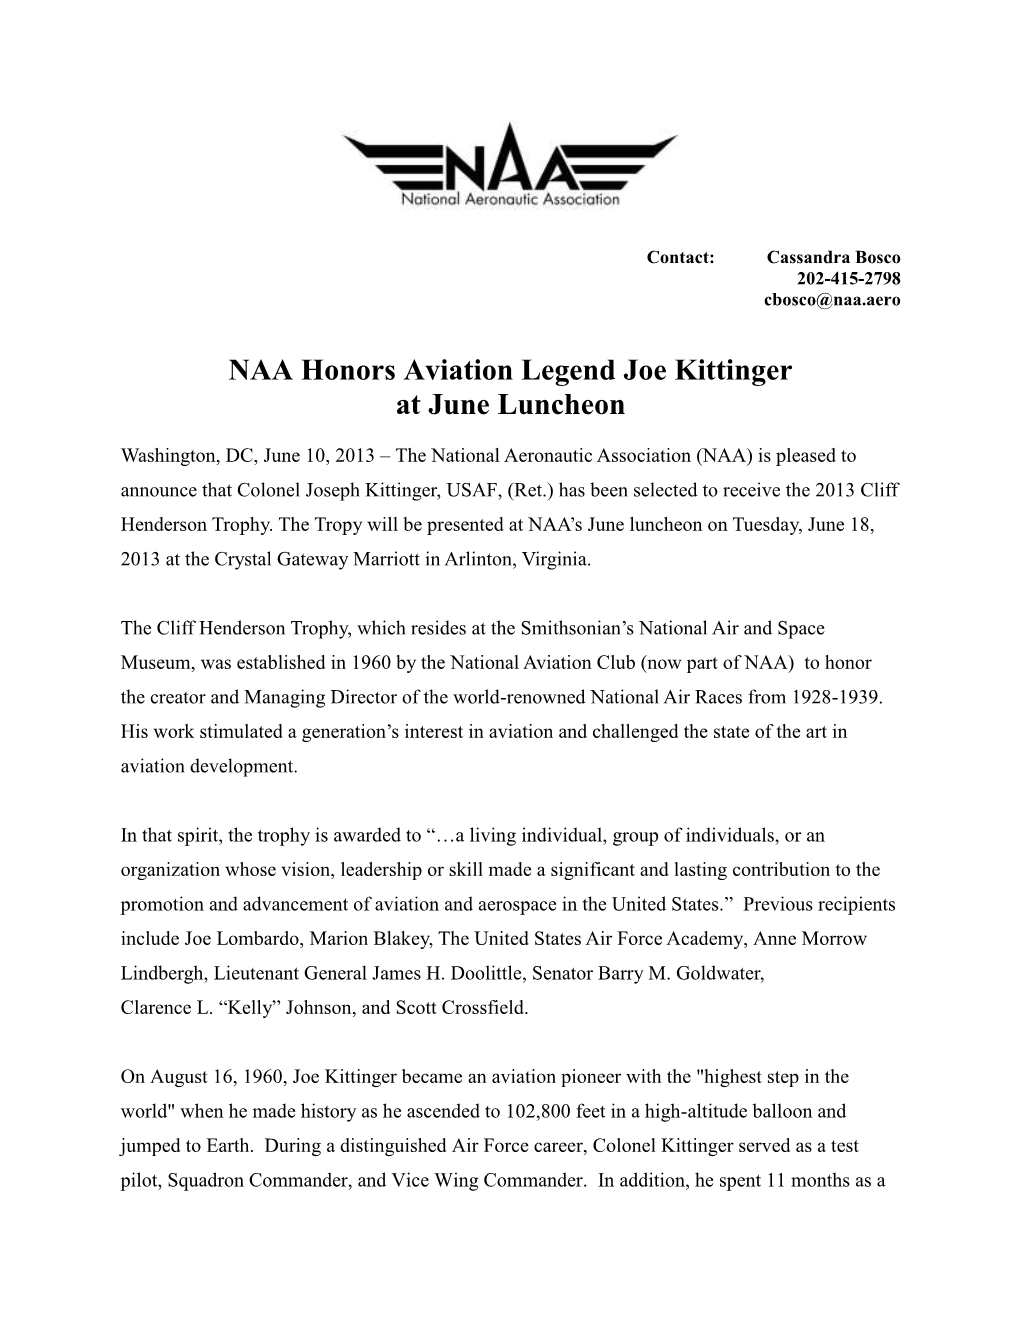 NAA Honors Aviation Legend Joe Kittinger at June Luncheon